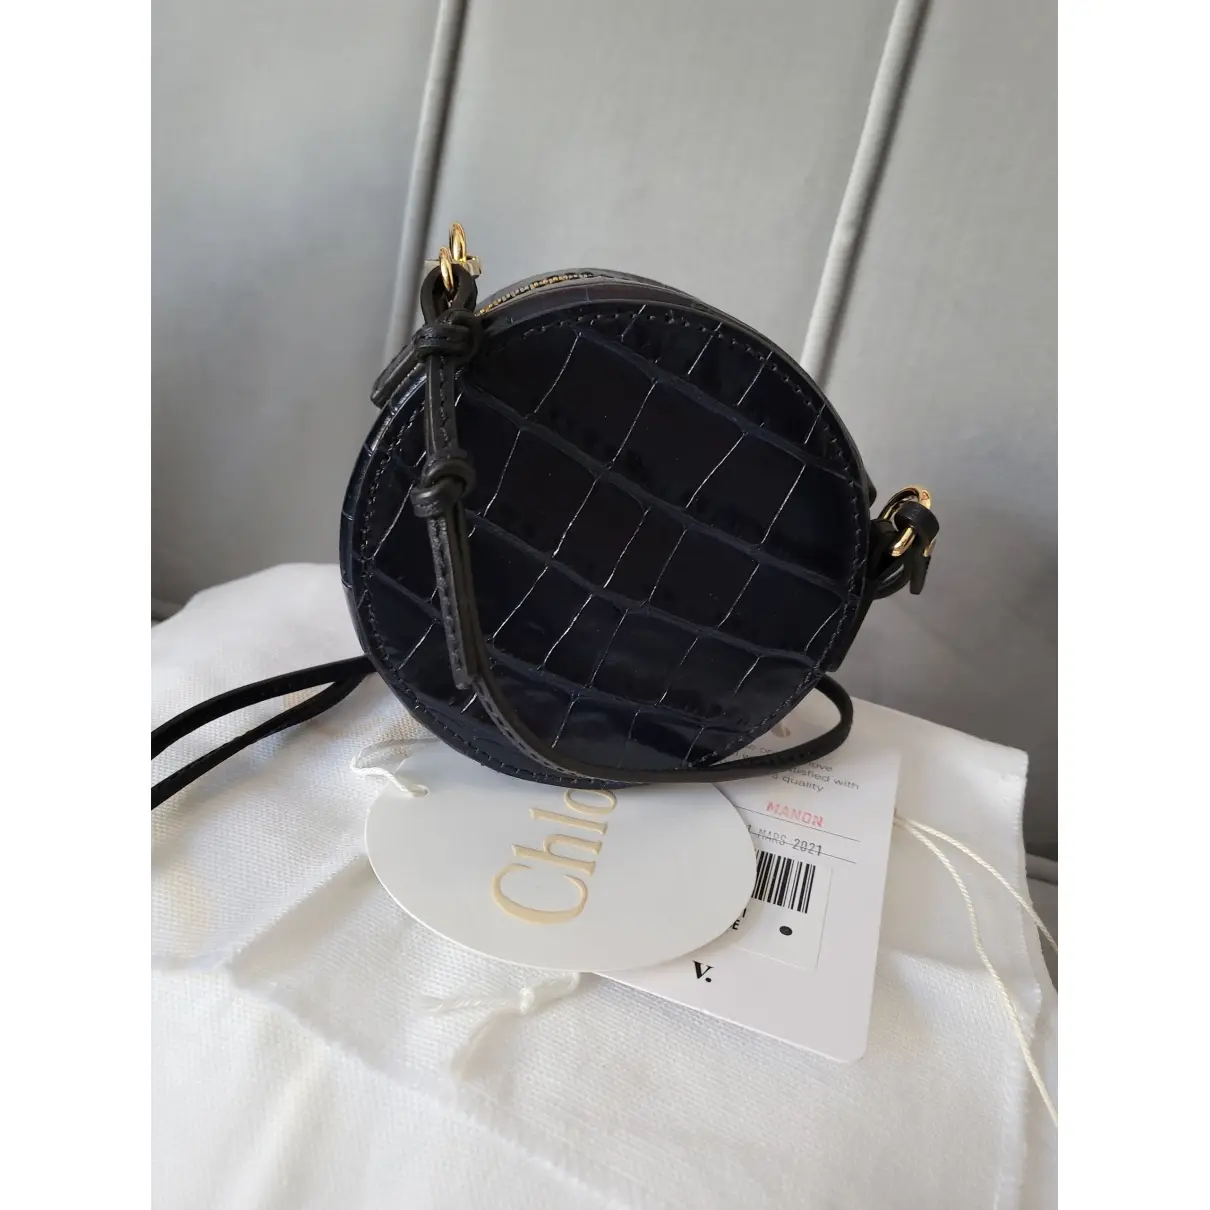 Buy Chloé C leather crossbody bag online